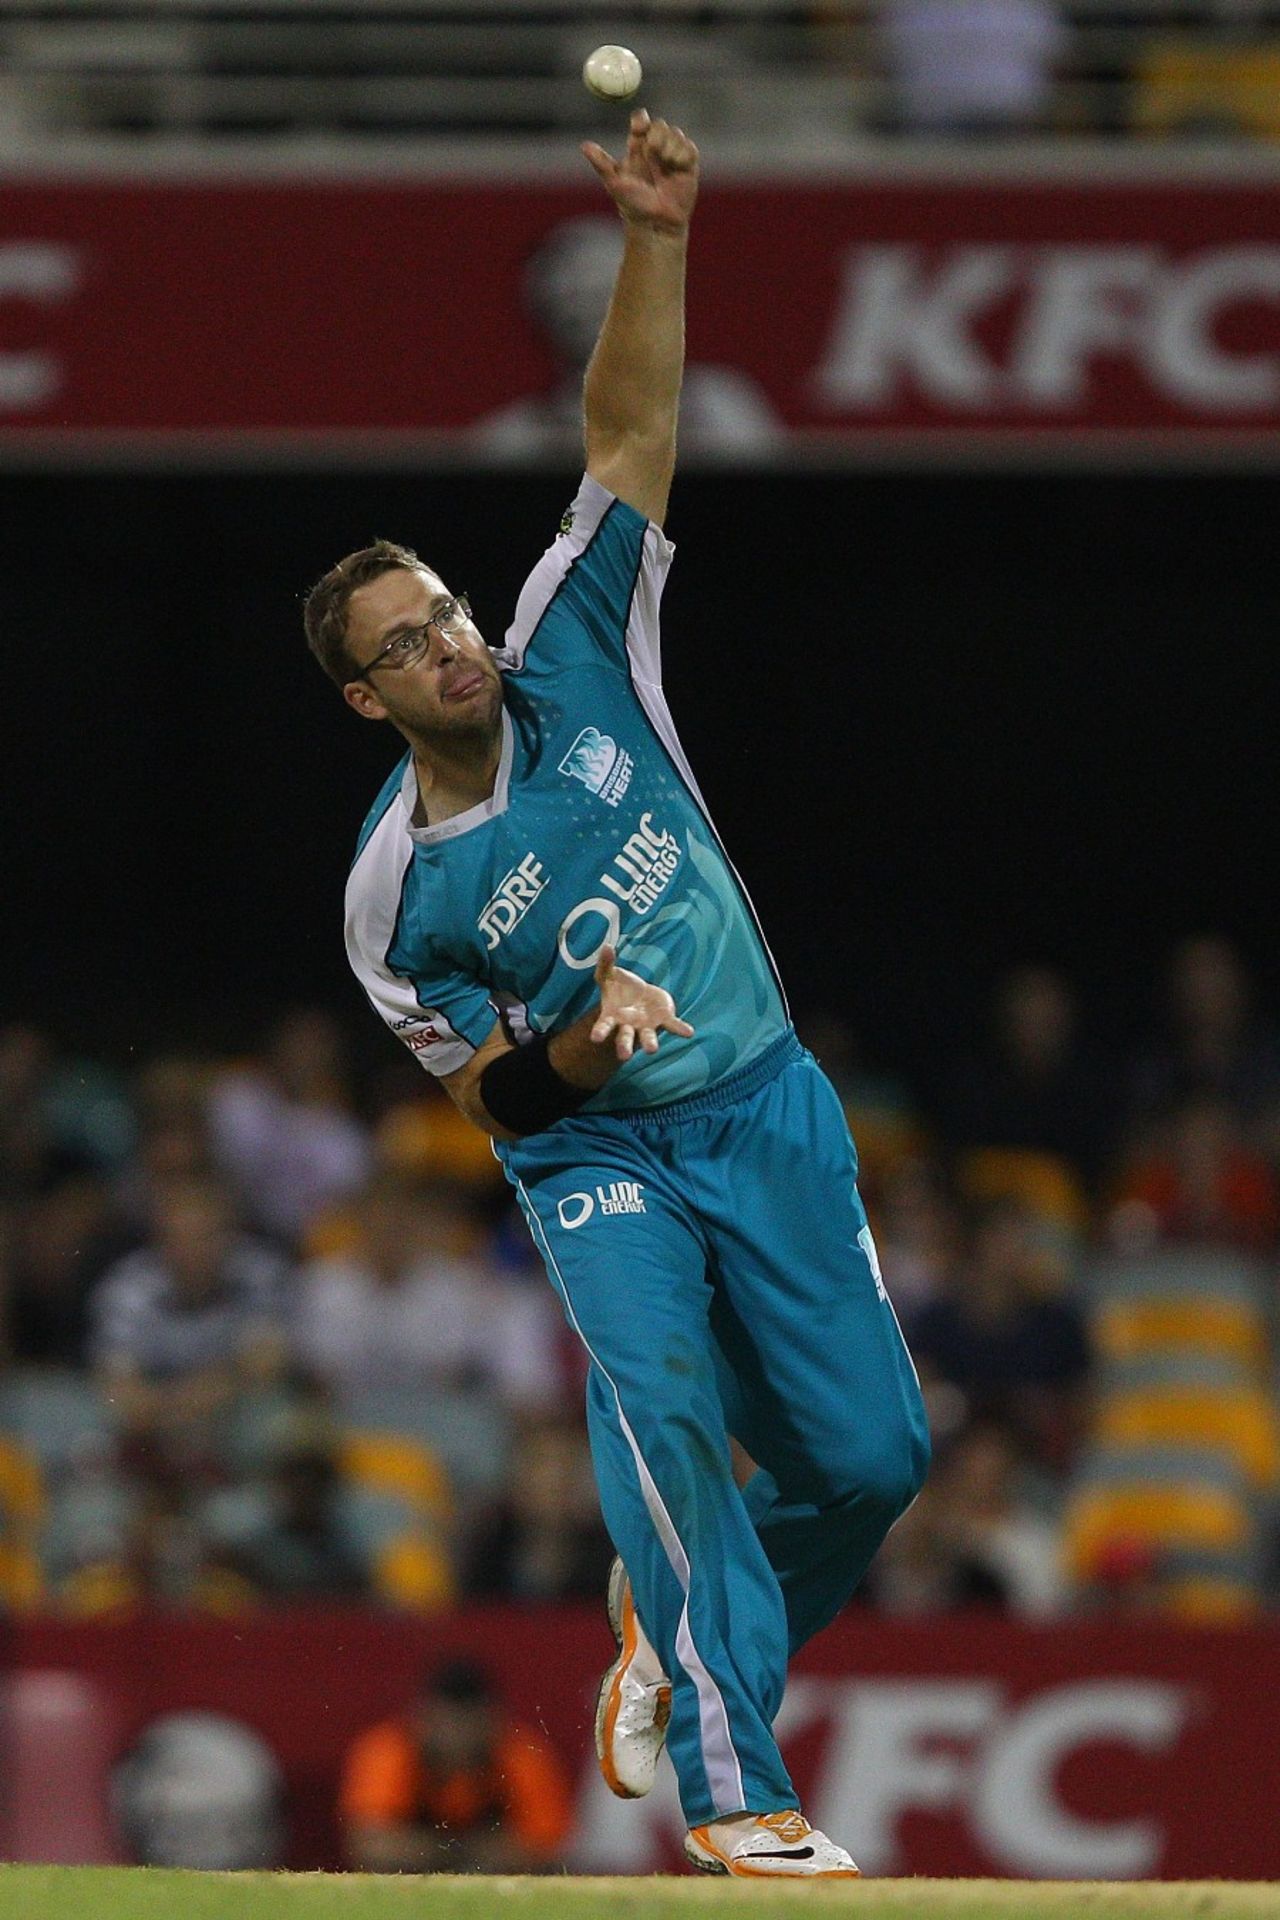 Daniel Vettori sends down a delivery, Brisbane Heat v Sydney Thunder, BBL, Brisbane, January 17, 2012